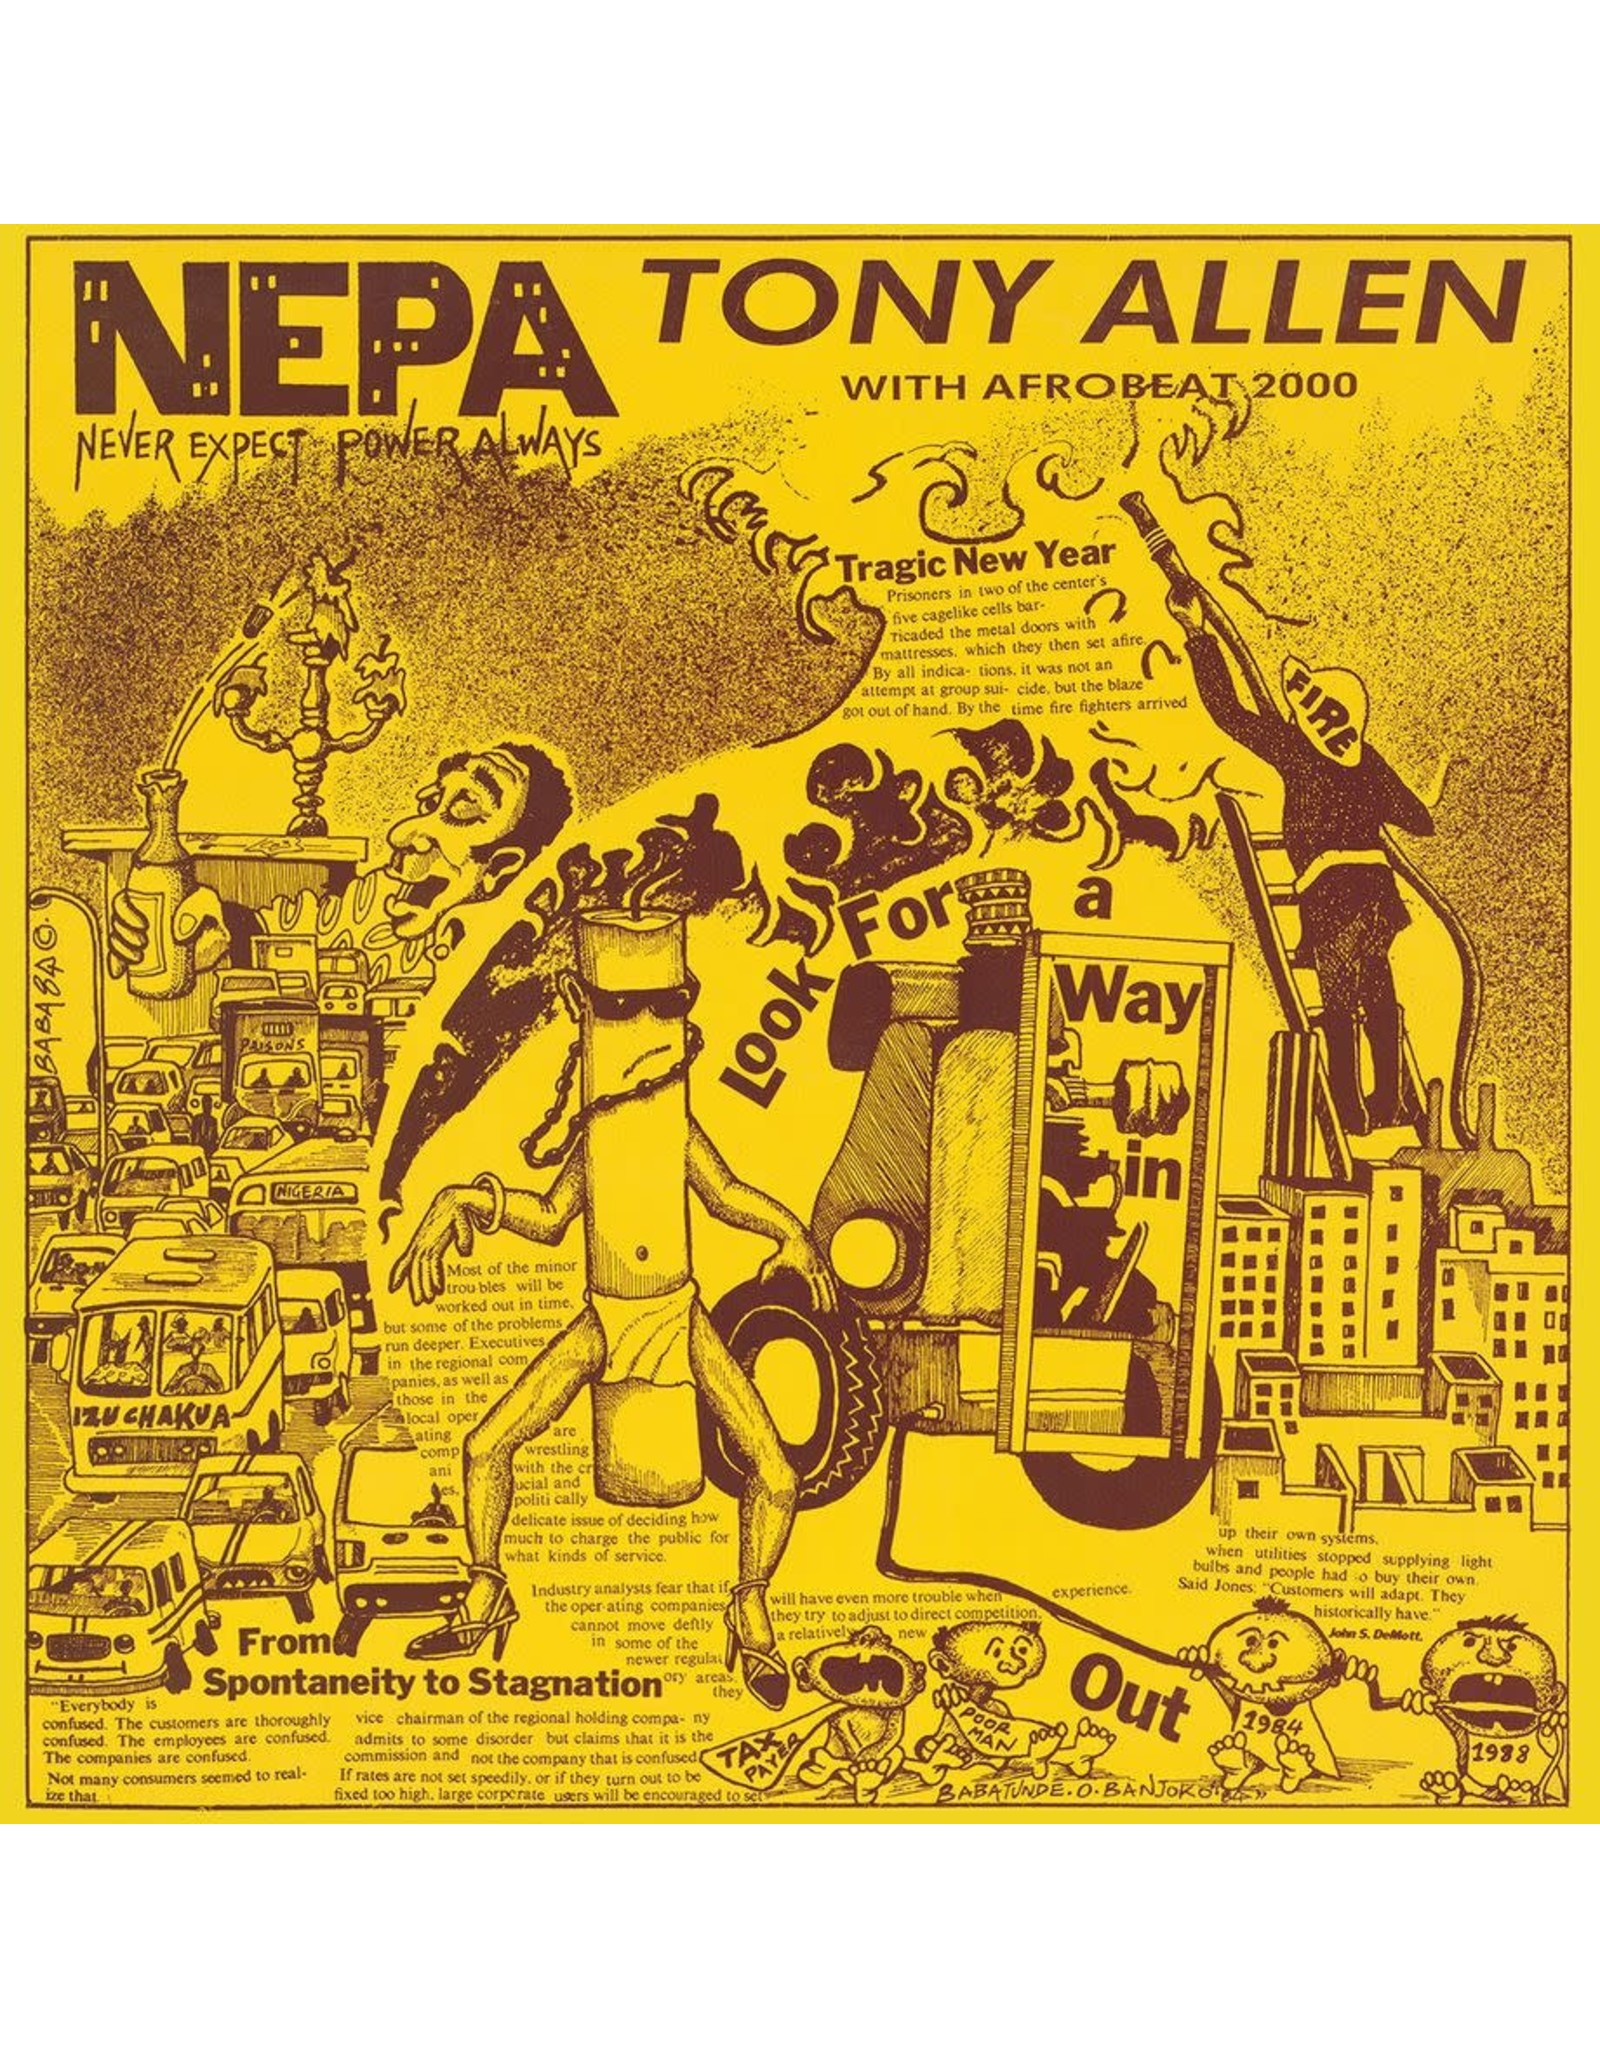 Comet Allen & Afrobeat 2000, Tony: N.E.P.A. LP